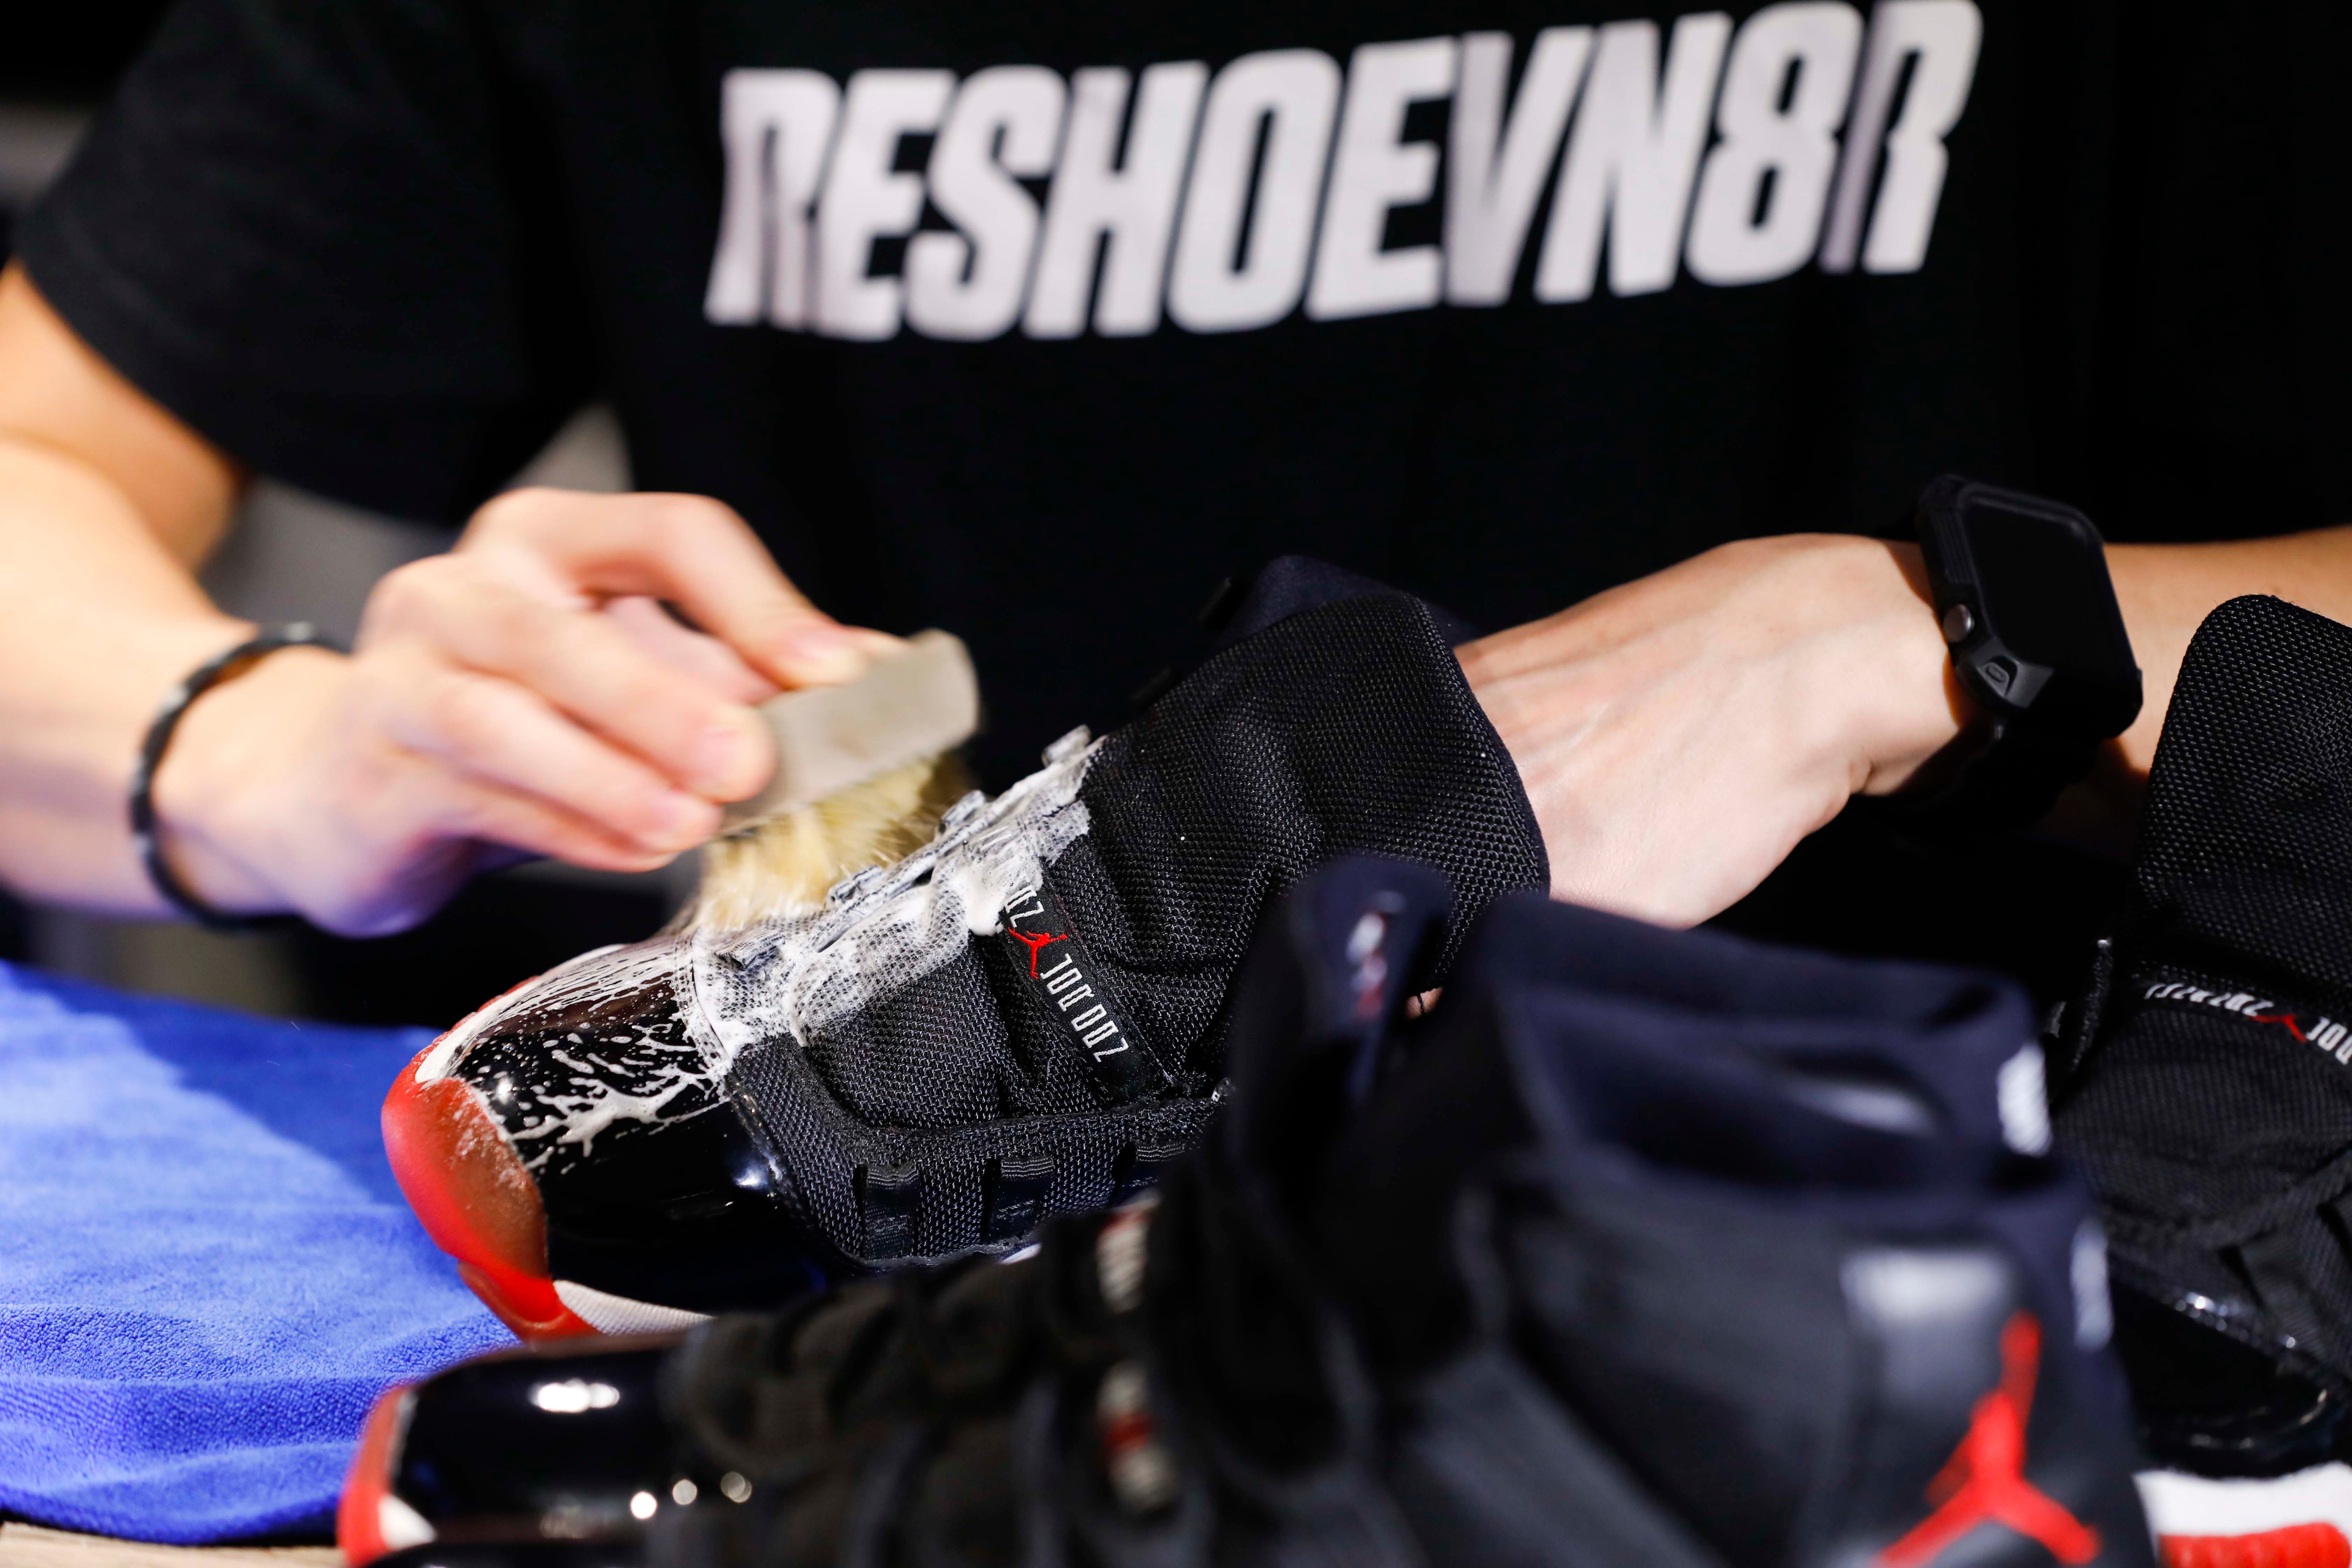 Reshoevn8r 香港區推出點對點登門收發球鞋護理服務